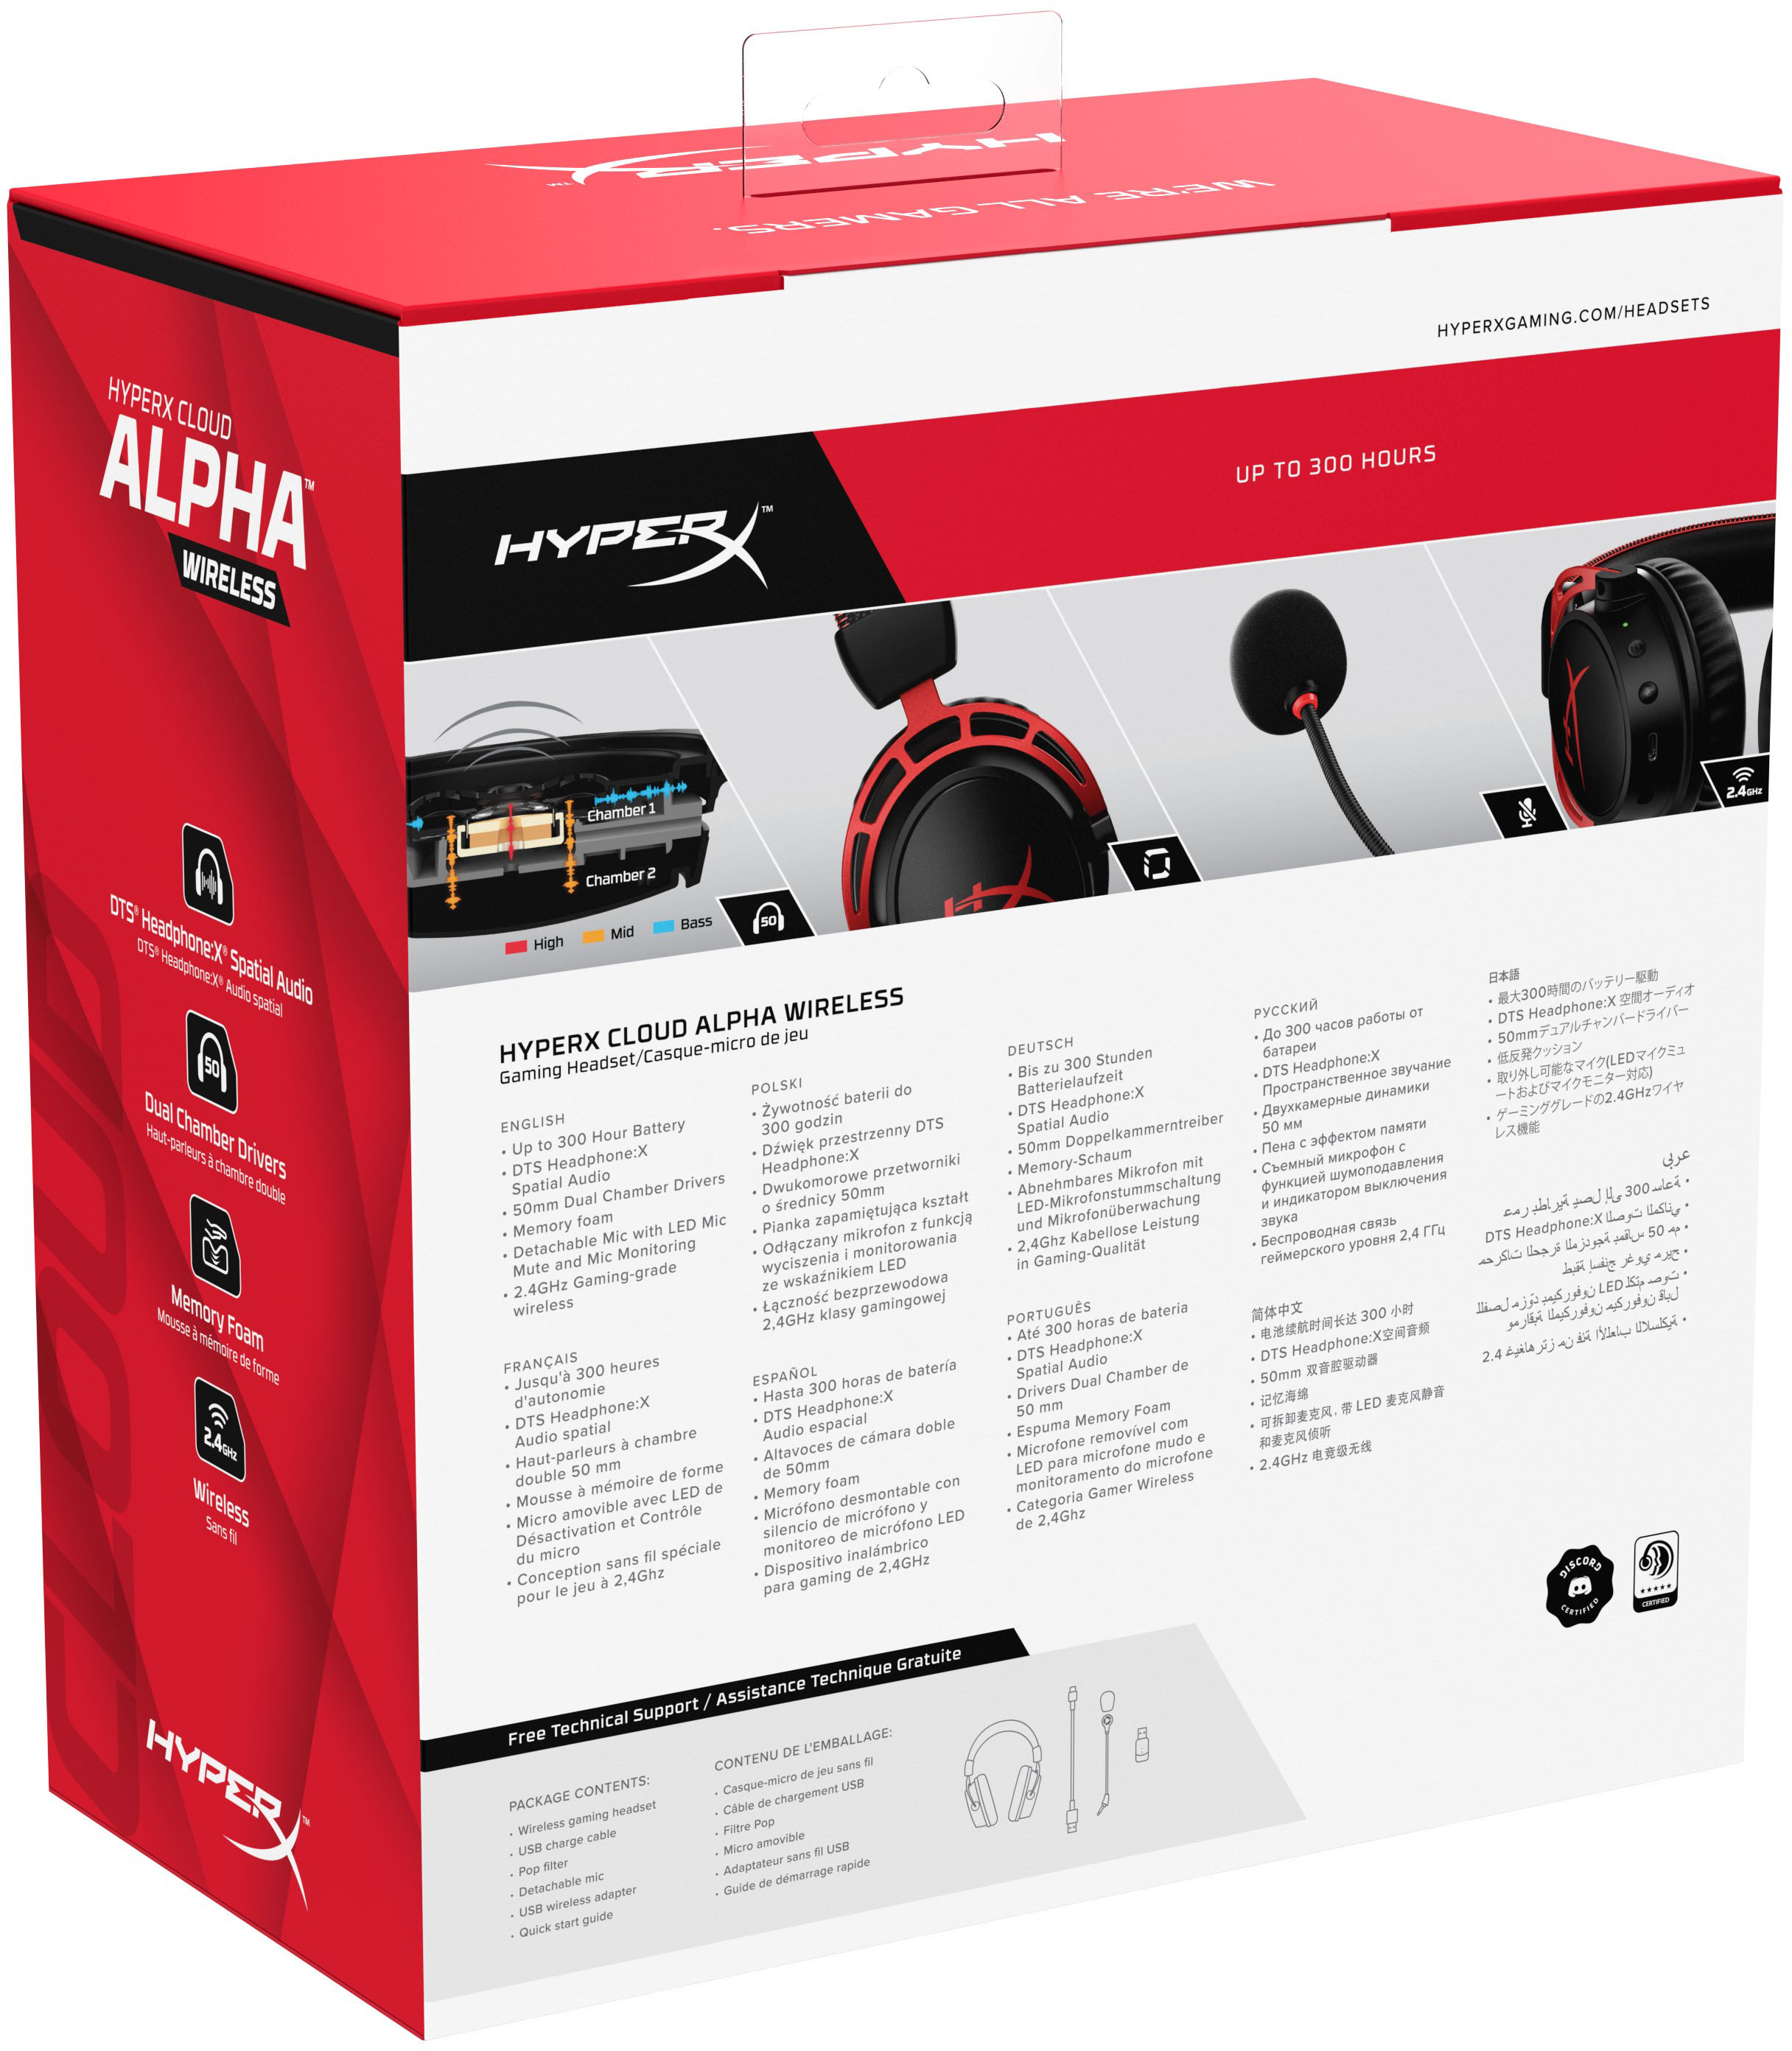 HyperX Cloud Alpha Wireless DTS Headphone:X Gaming Headset for PC 